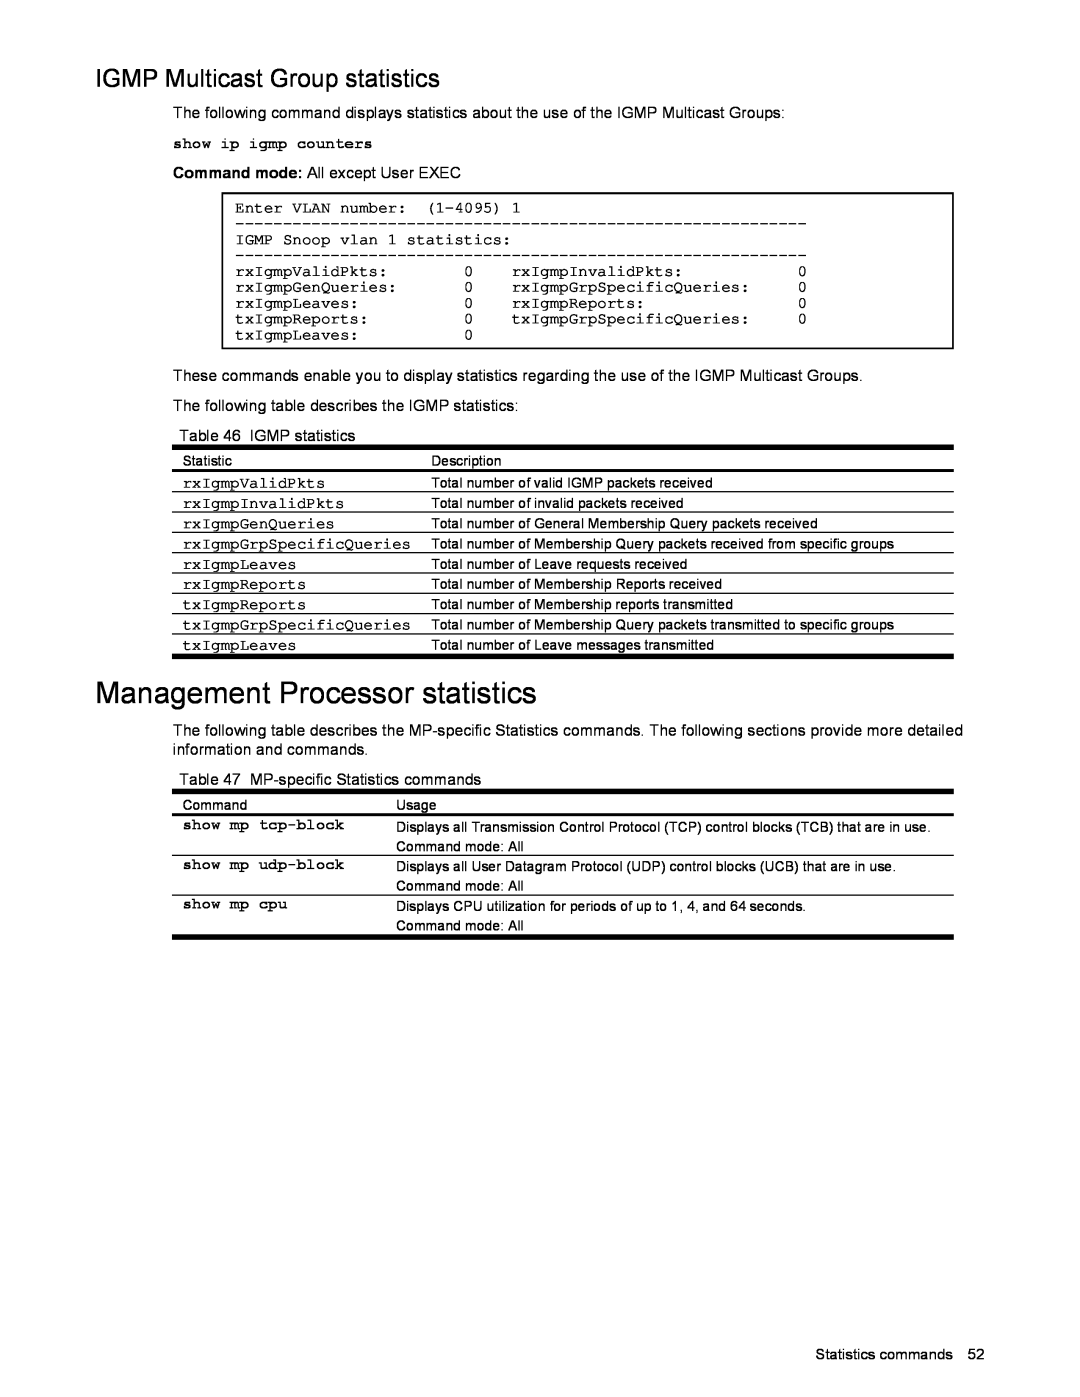 NEC N8406-022 manual Management Processor statistics, IGMP Multicast Group statistics 